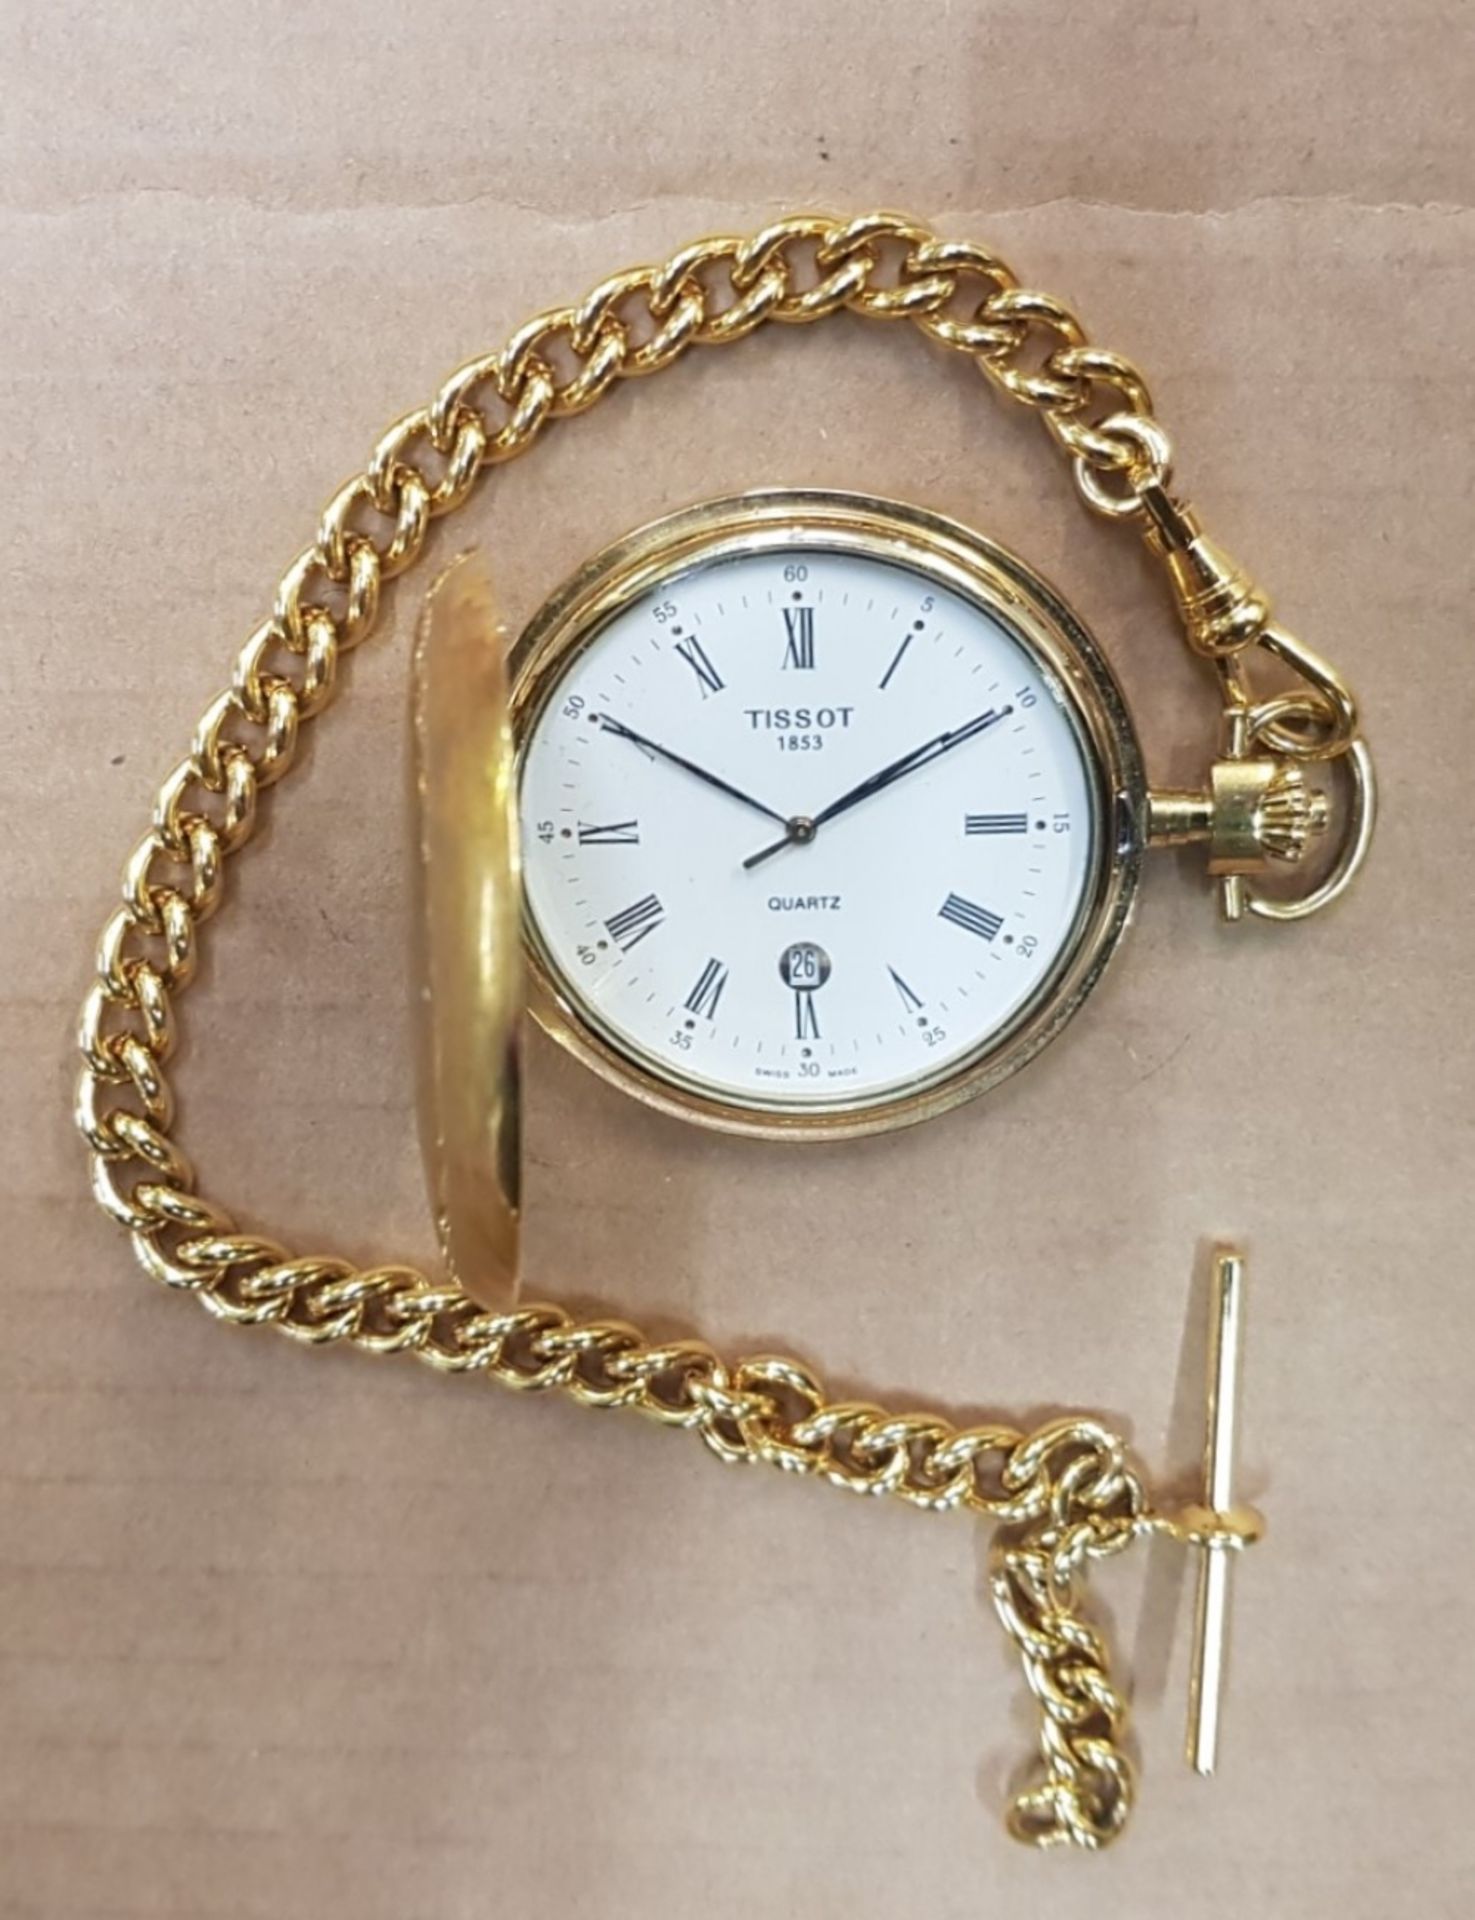 Tissot gold tone quartz pocket watch and chain.